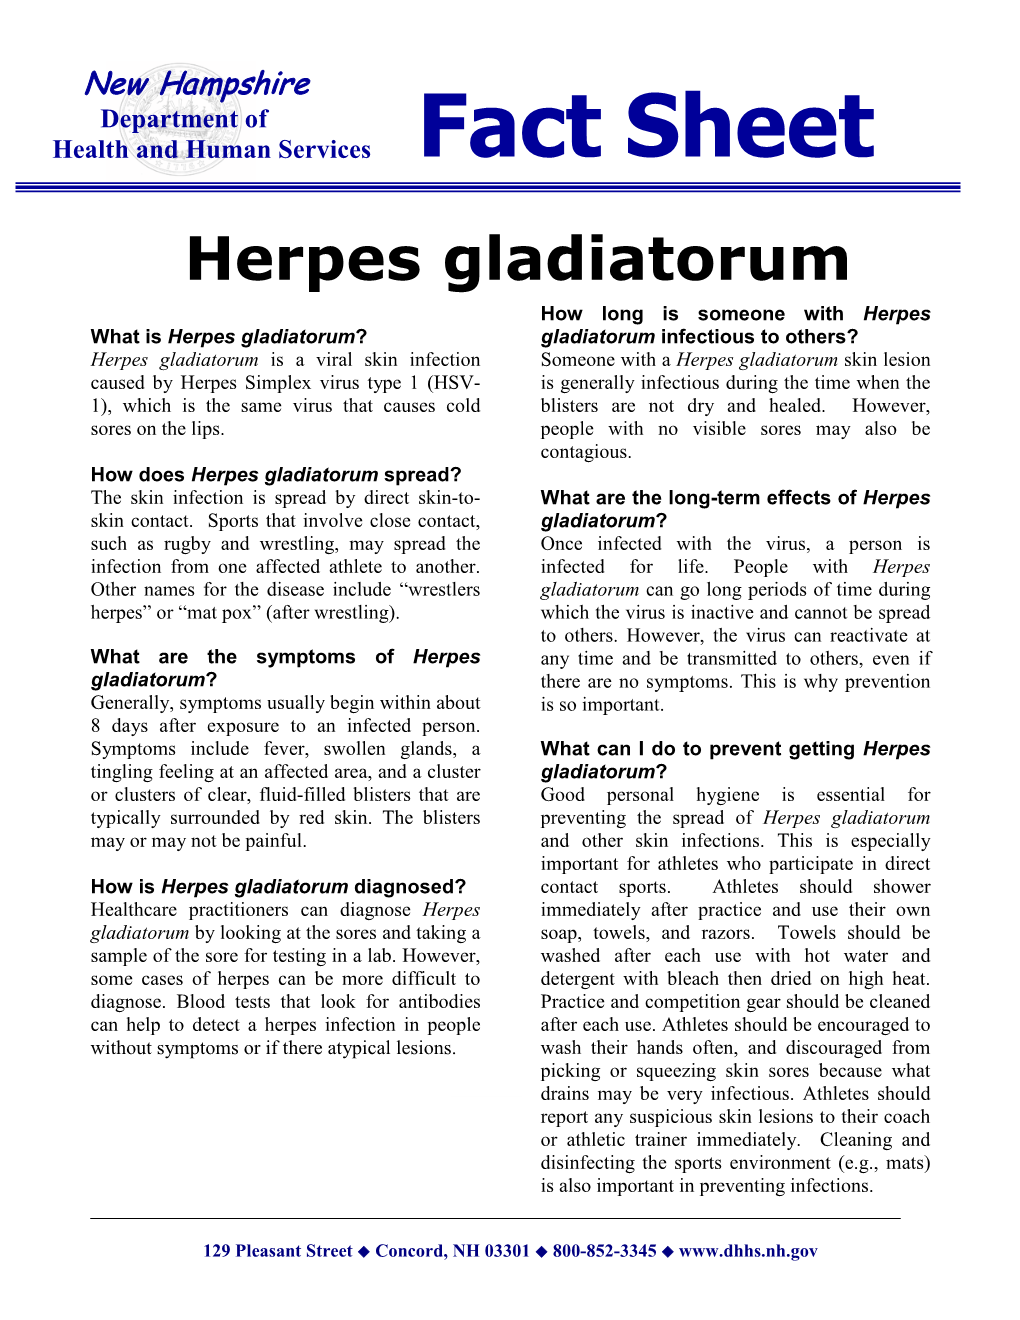 Herpes Gladiatorum